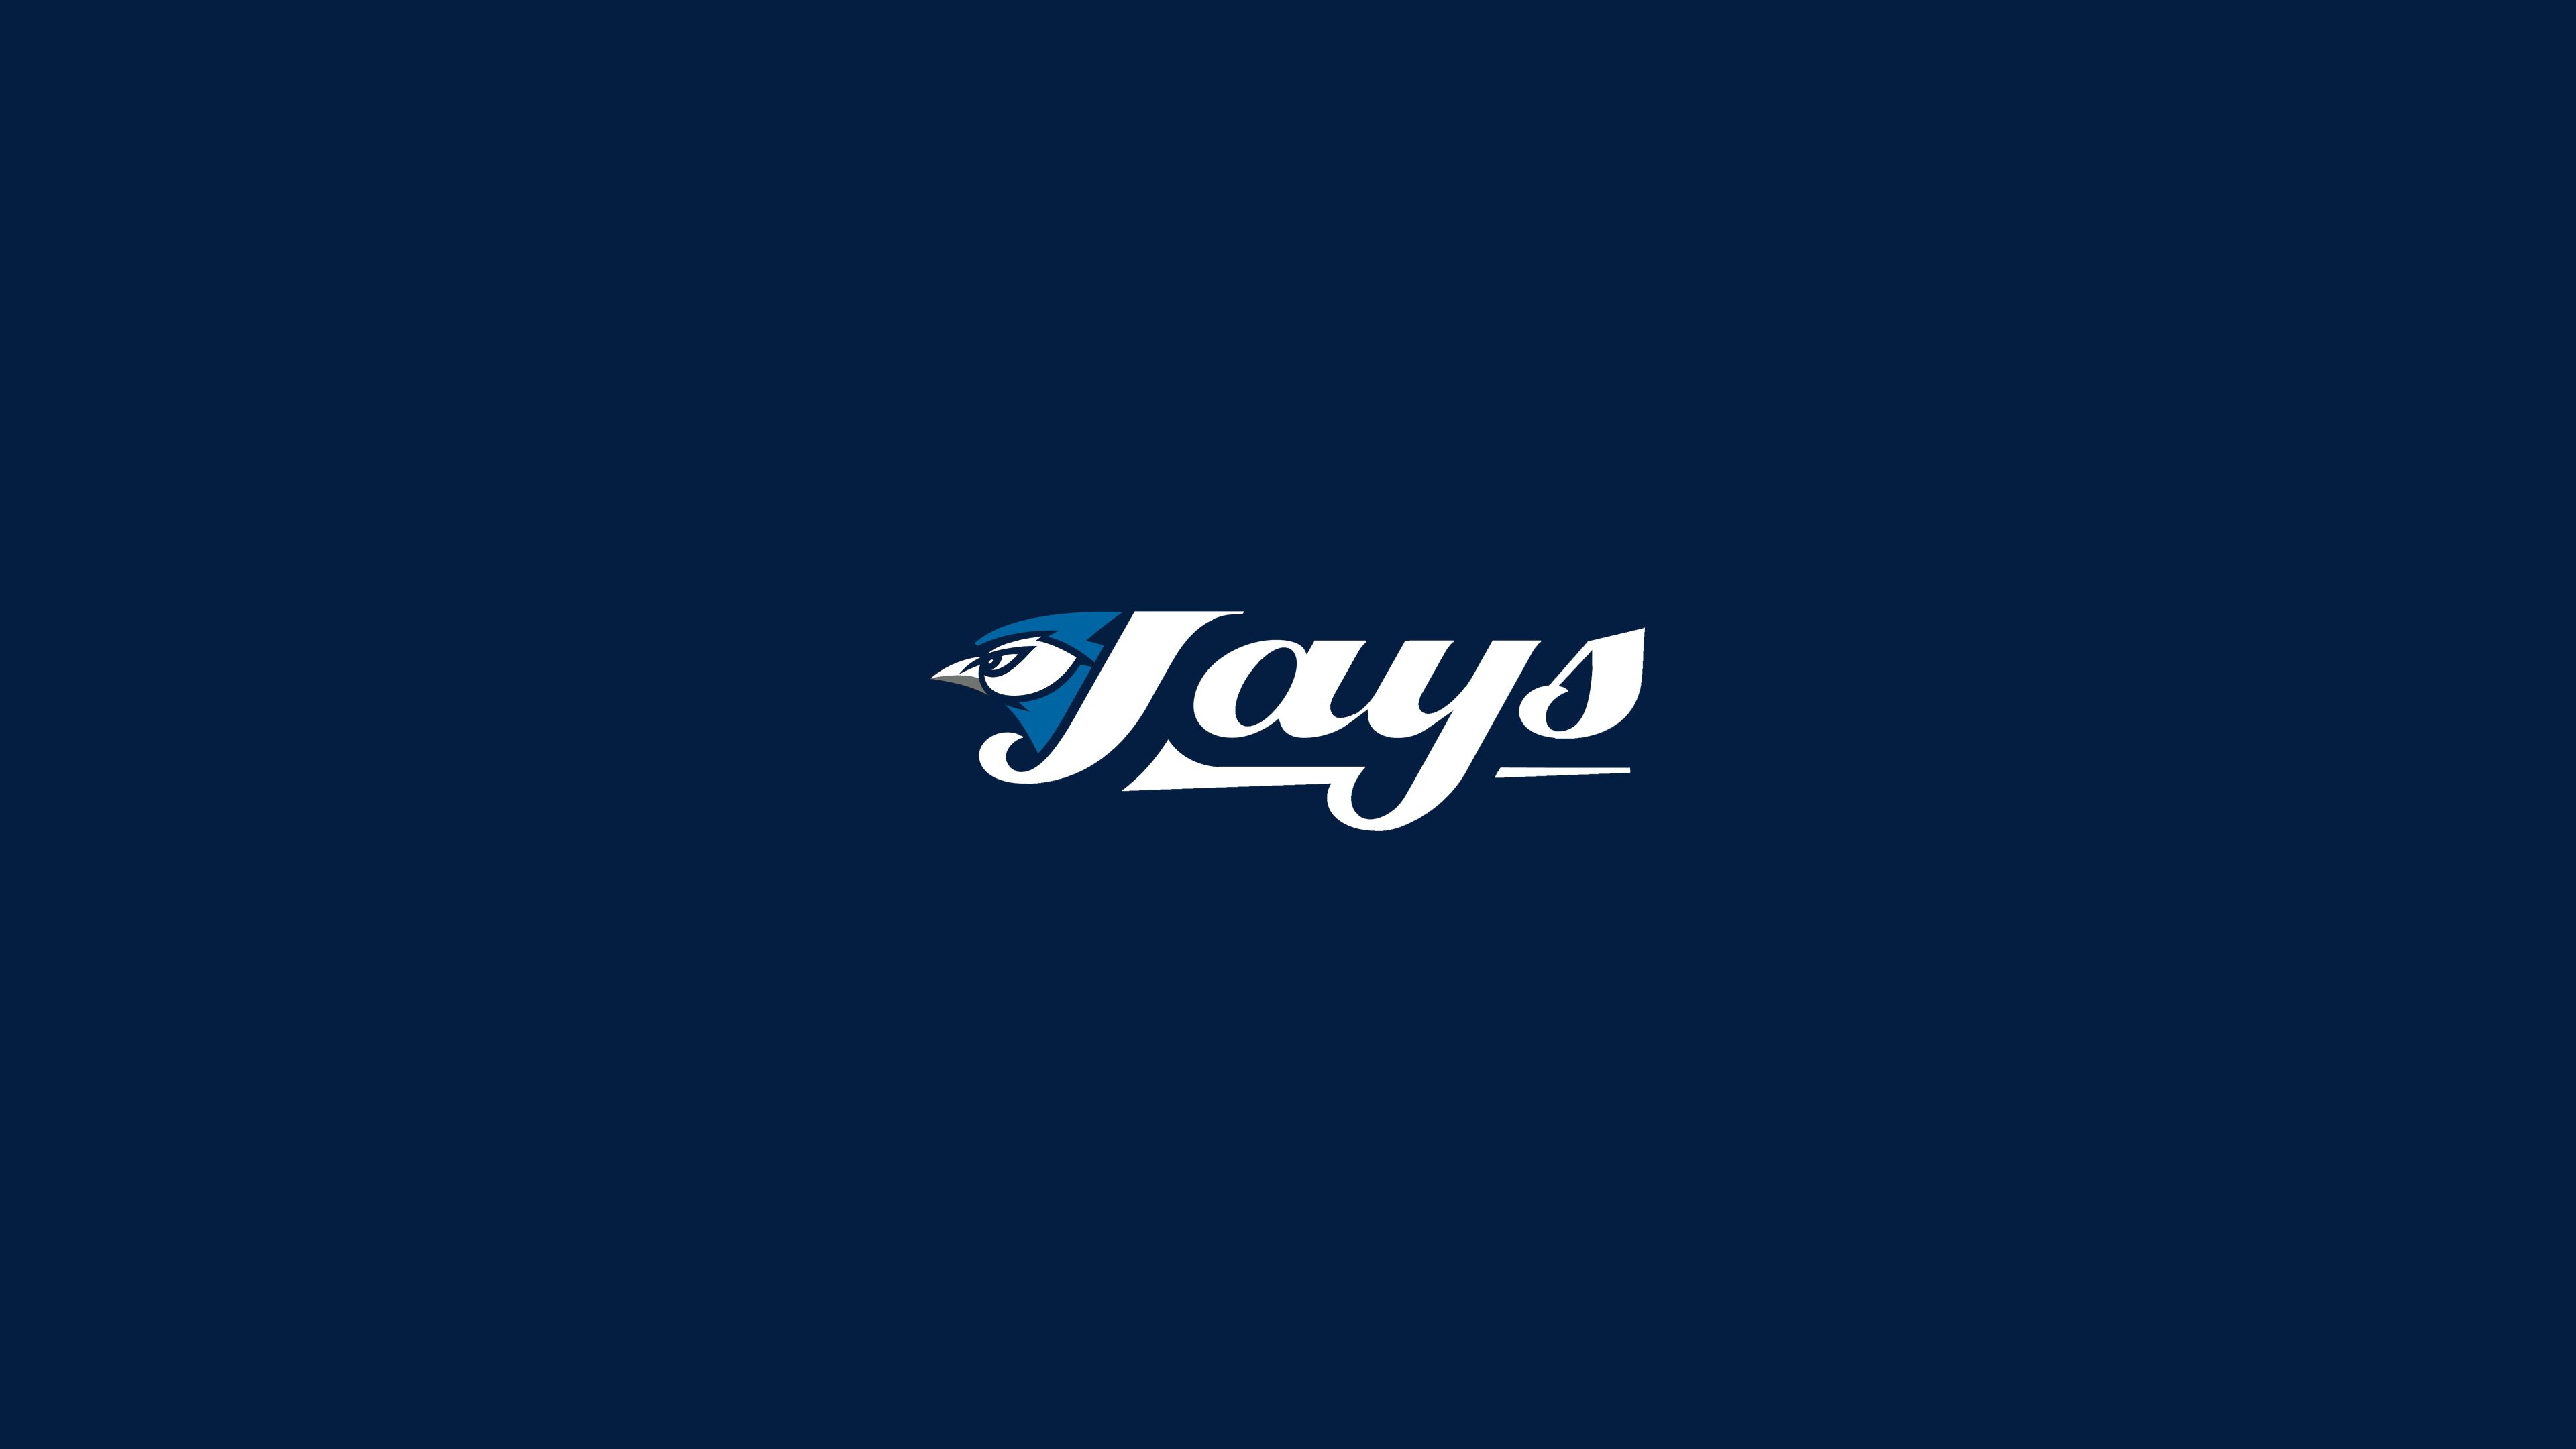 Toronto Blue Jays wallpapers for desktop, download free Toronto